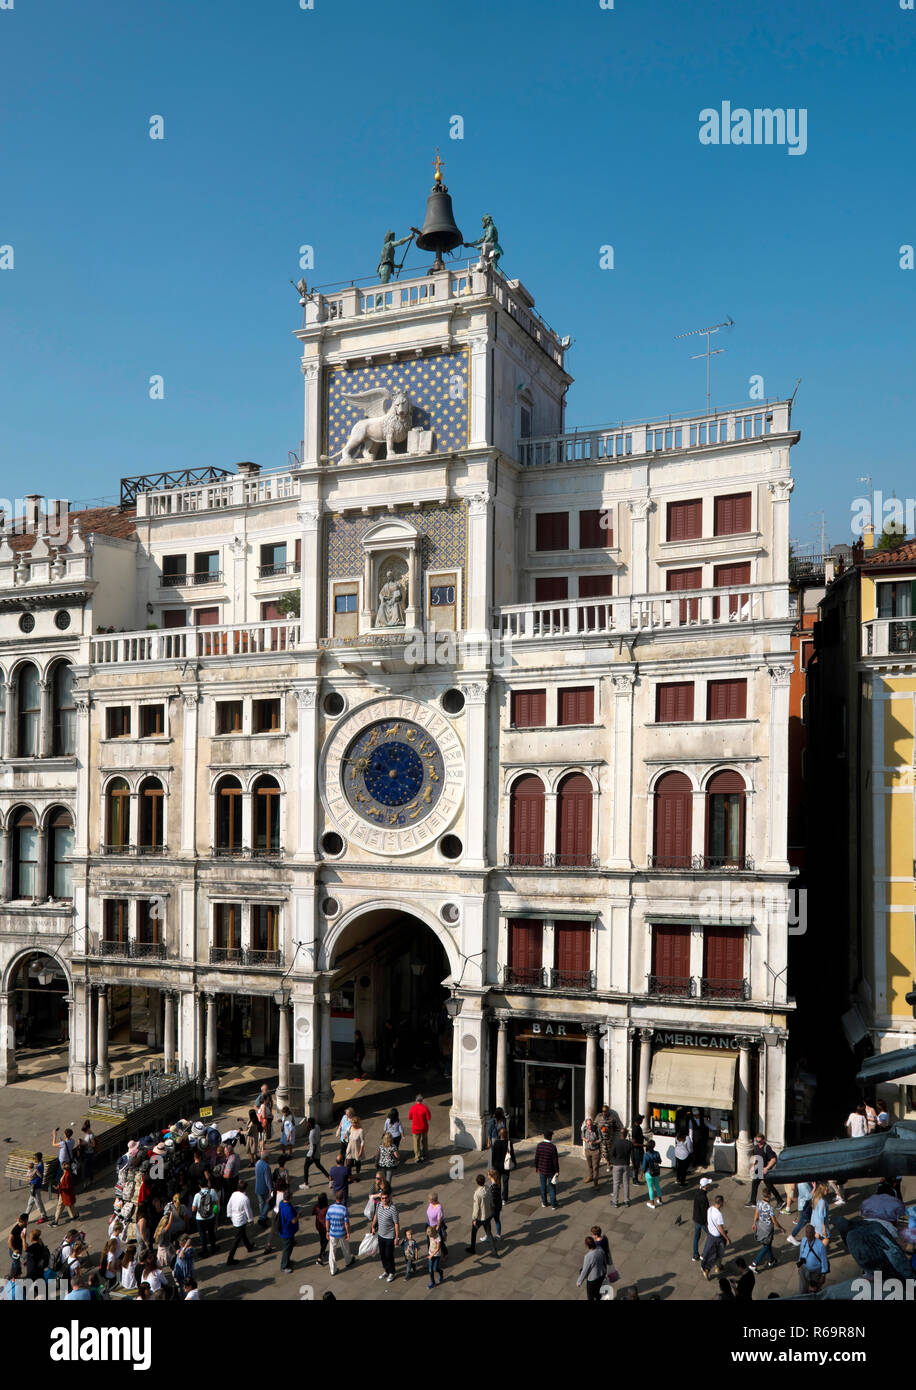 La torre del reloj, la Piazza San Marco, Venecia, Véneto, Italia Foto de stock